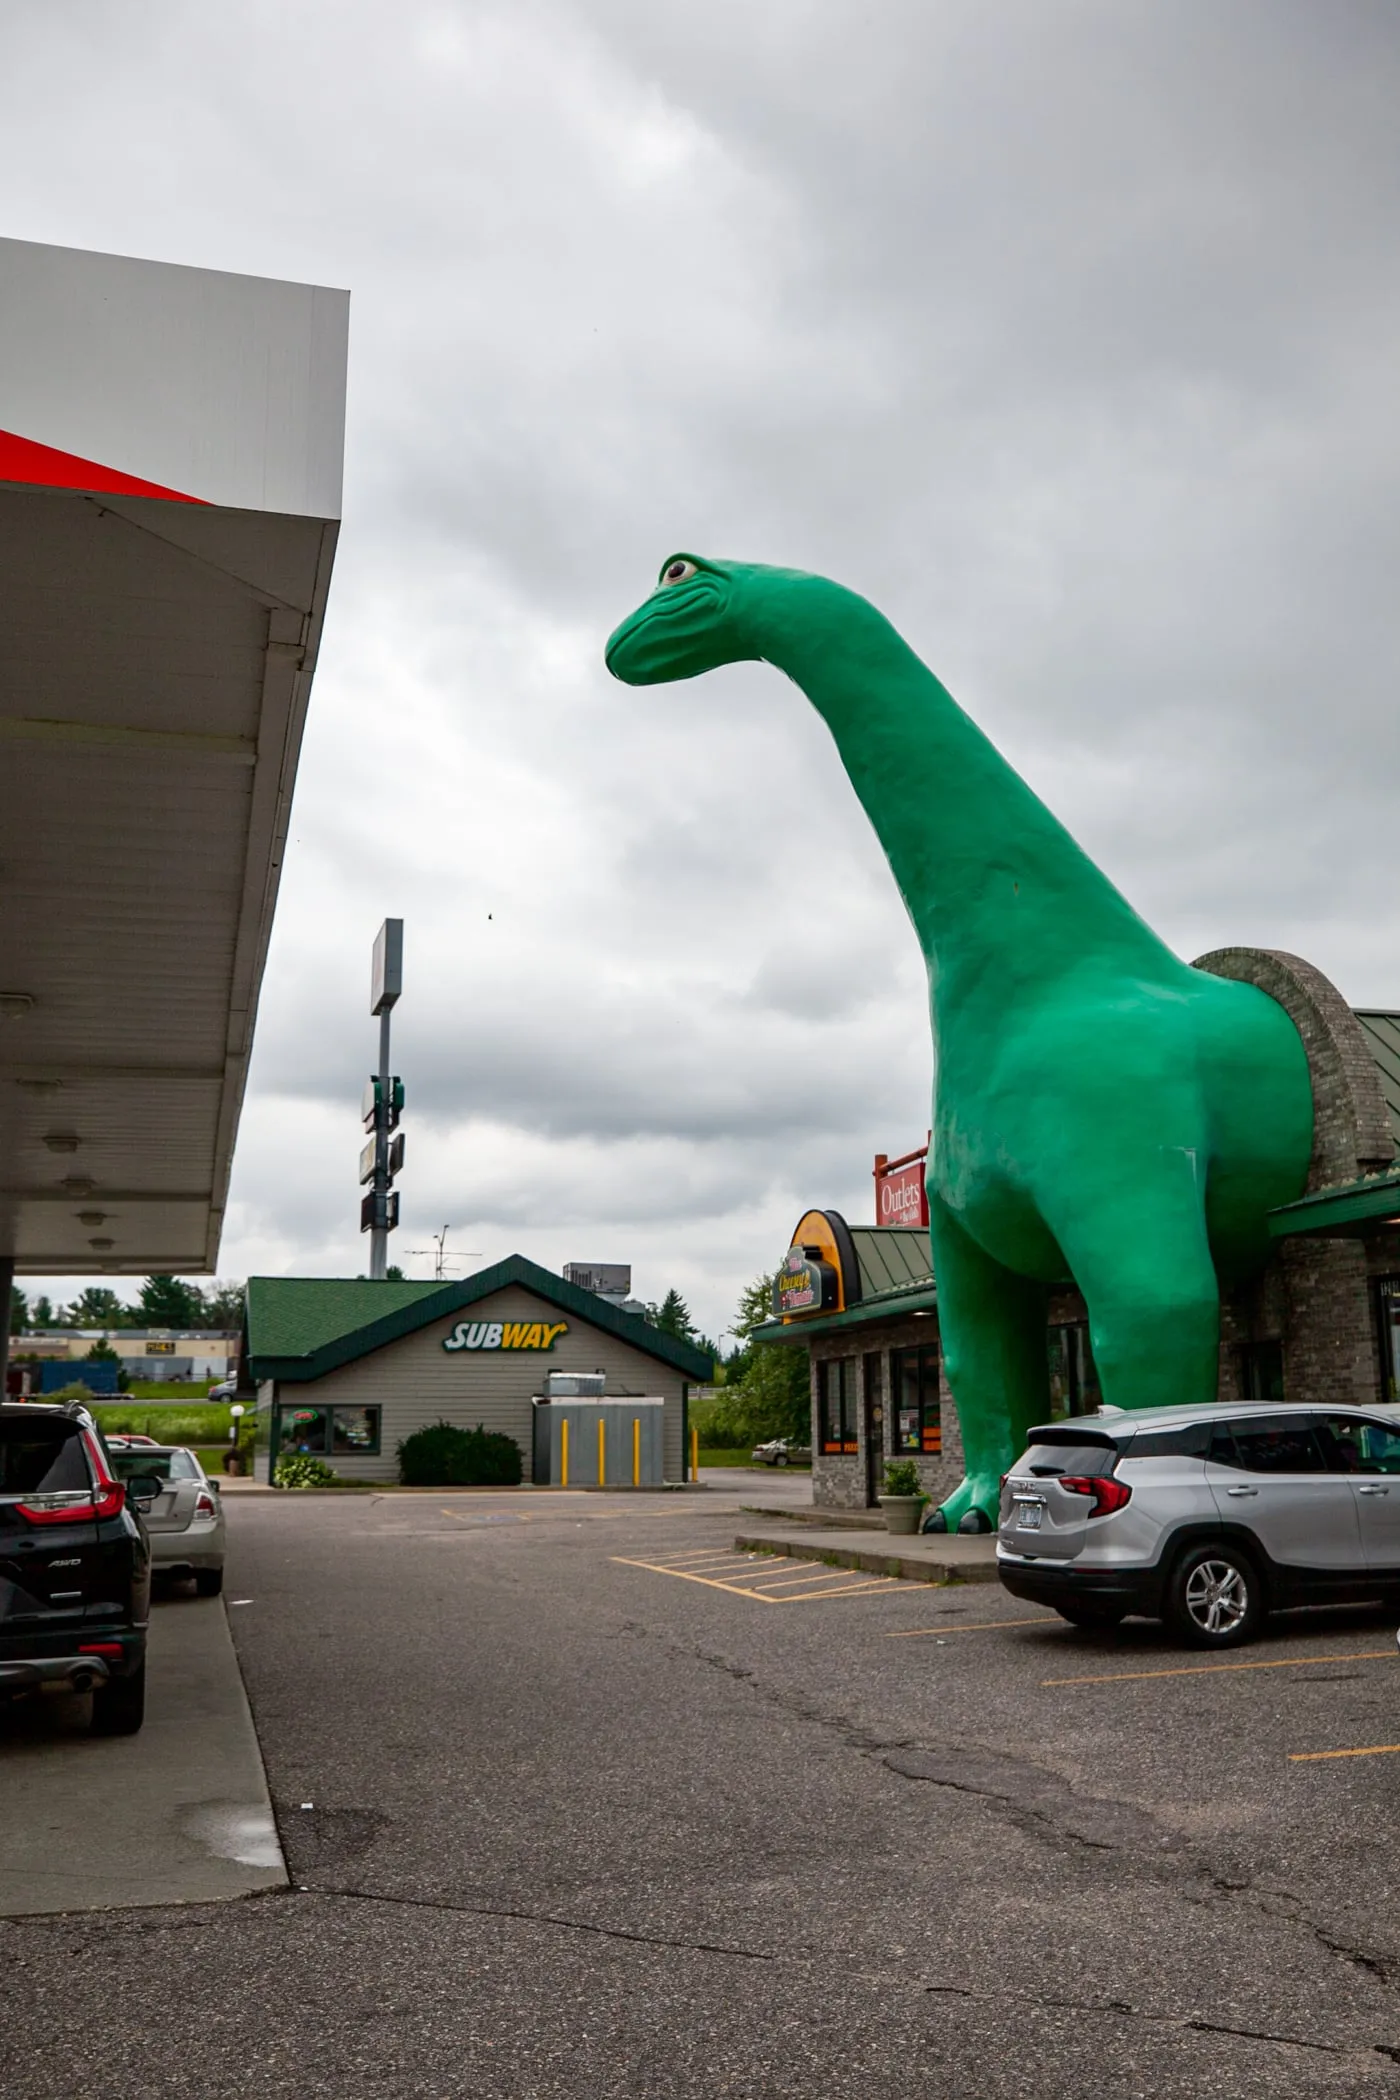 Giant Sinclair Dinosaur in Wisconsin Dells | Wisconsin Roadside Attractions